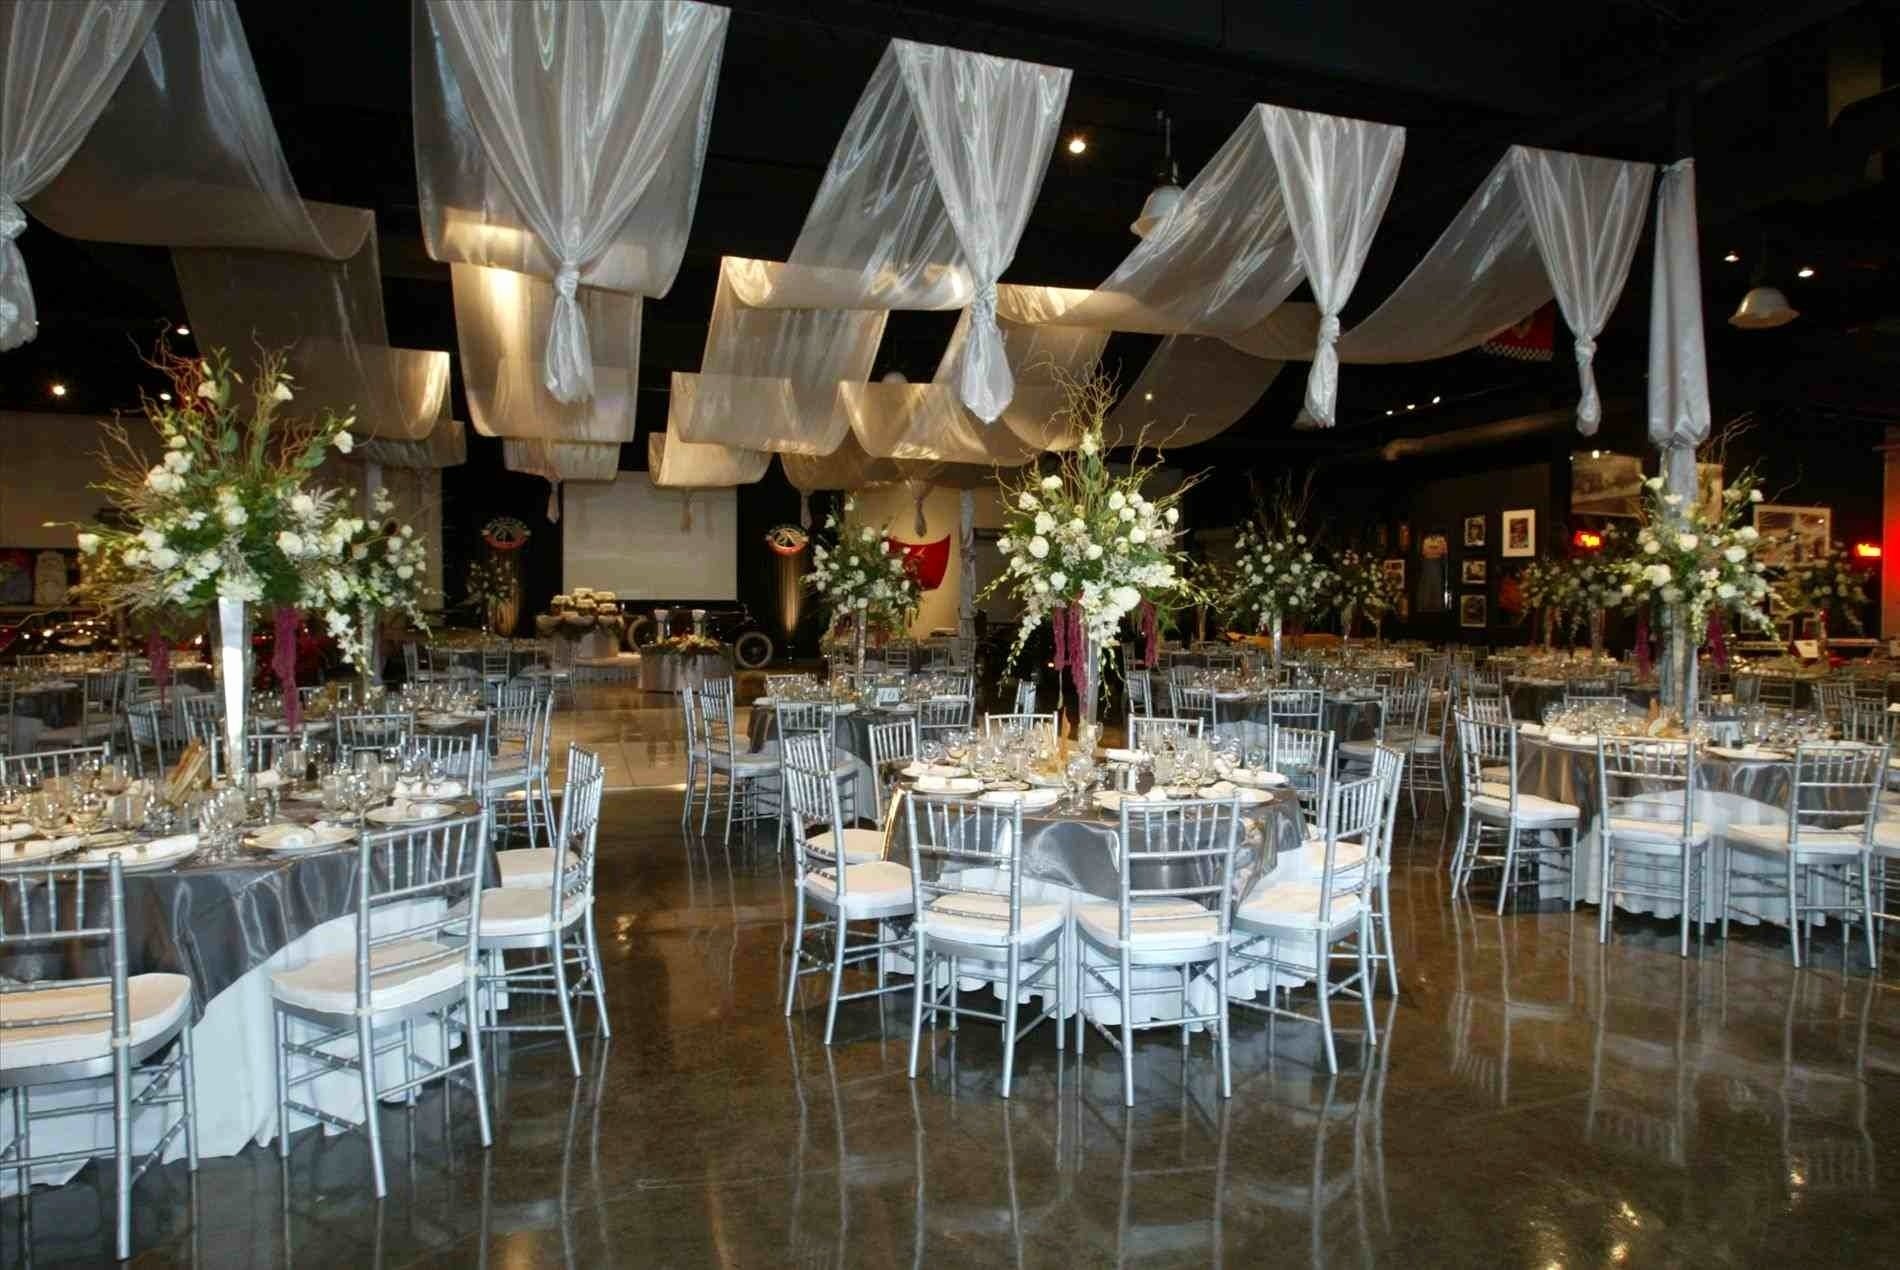 10 Spectacular Ideas For A Wedding Reception 50 lovely wedding reception table decorations ideas graphics 2022